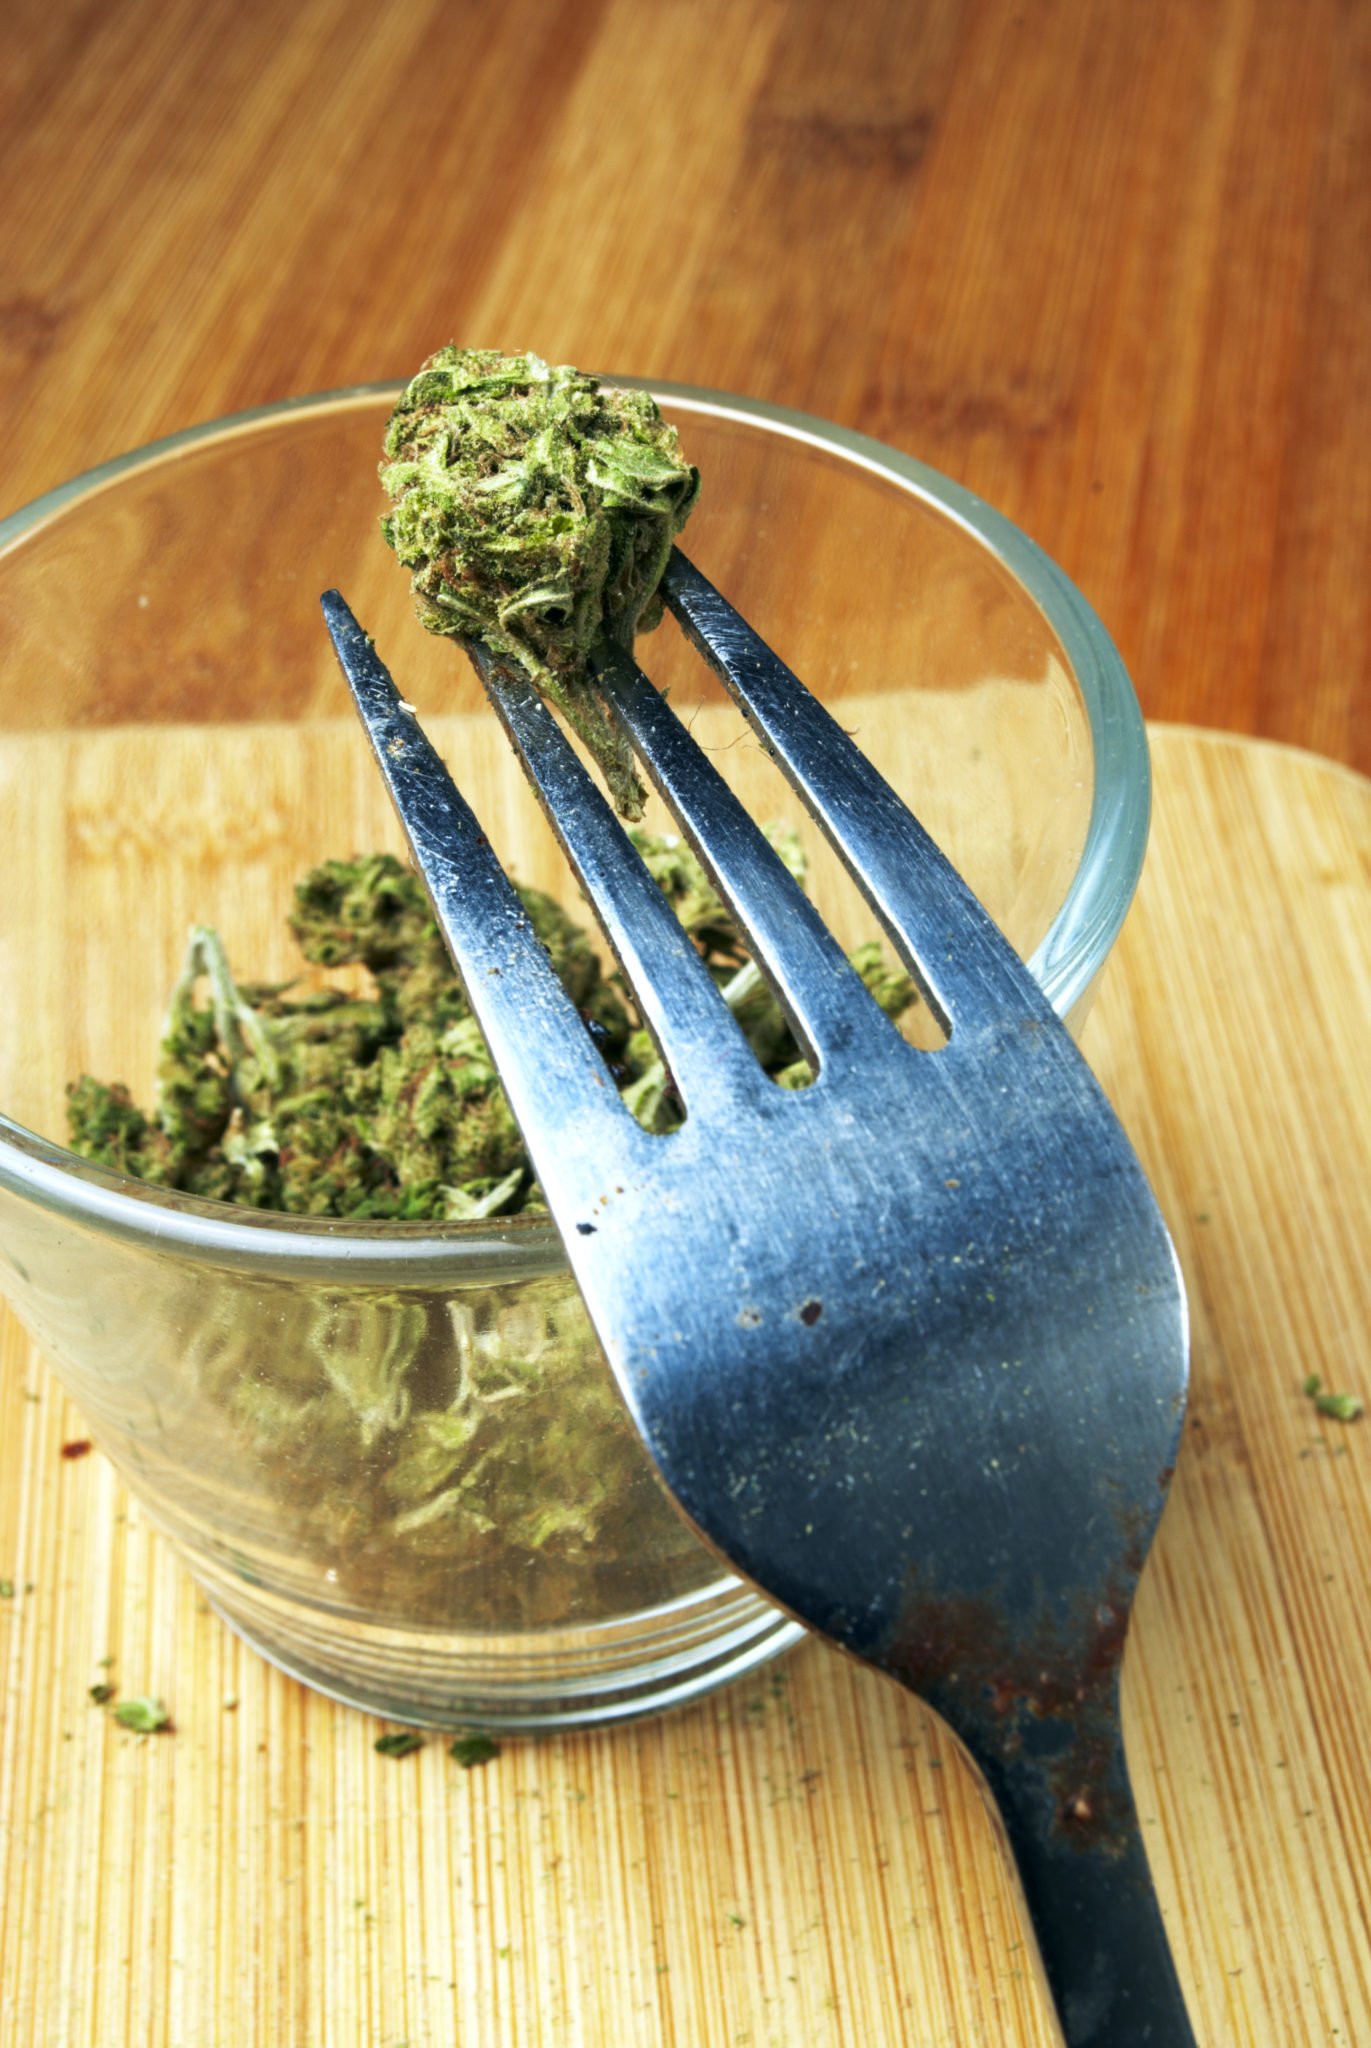 Weed, Medical Marijuana Grunge Detail and Background